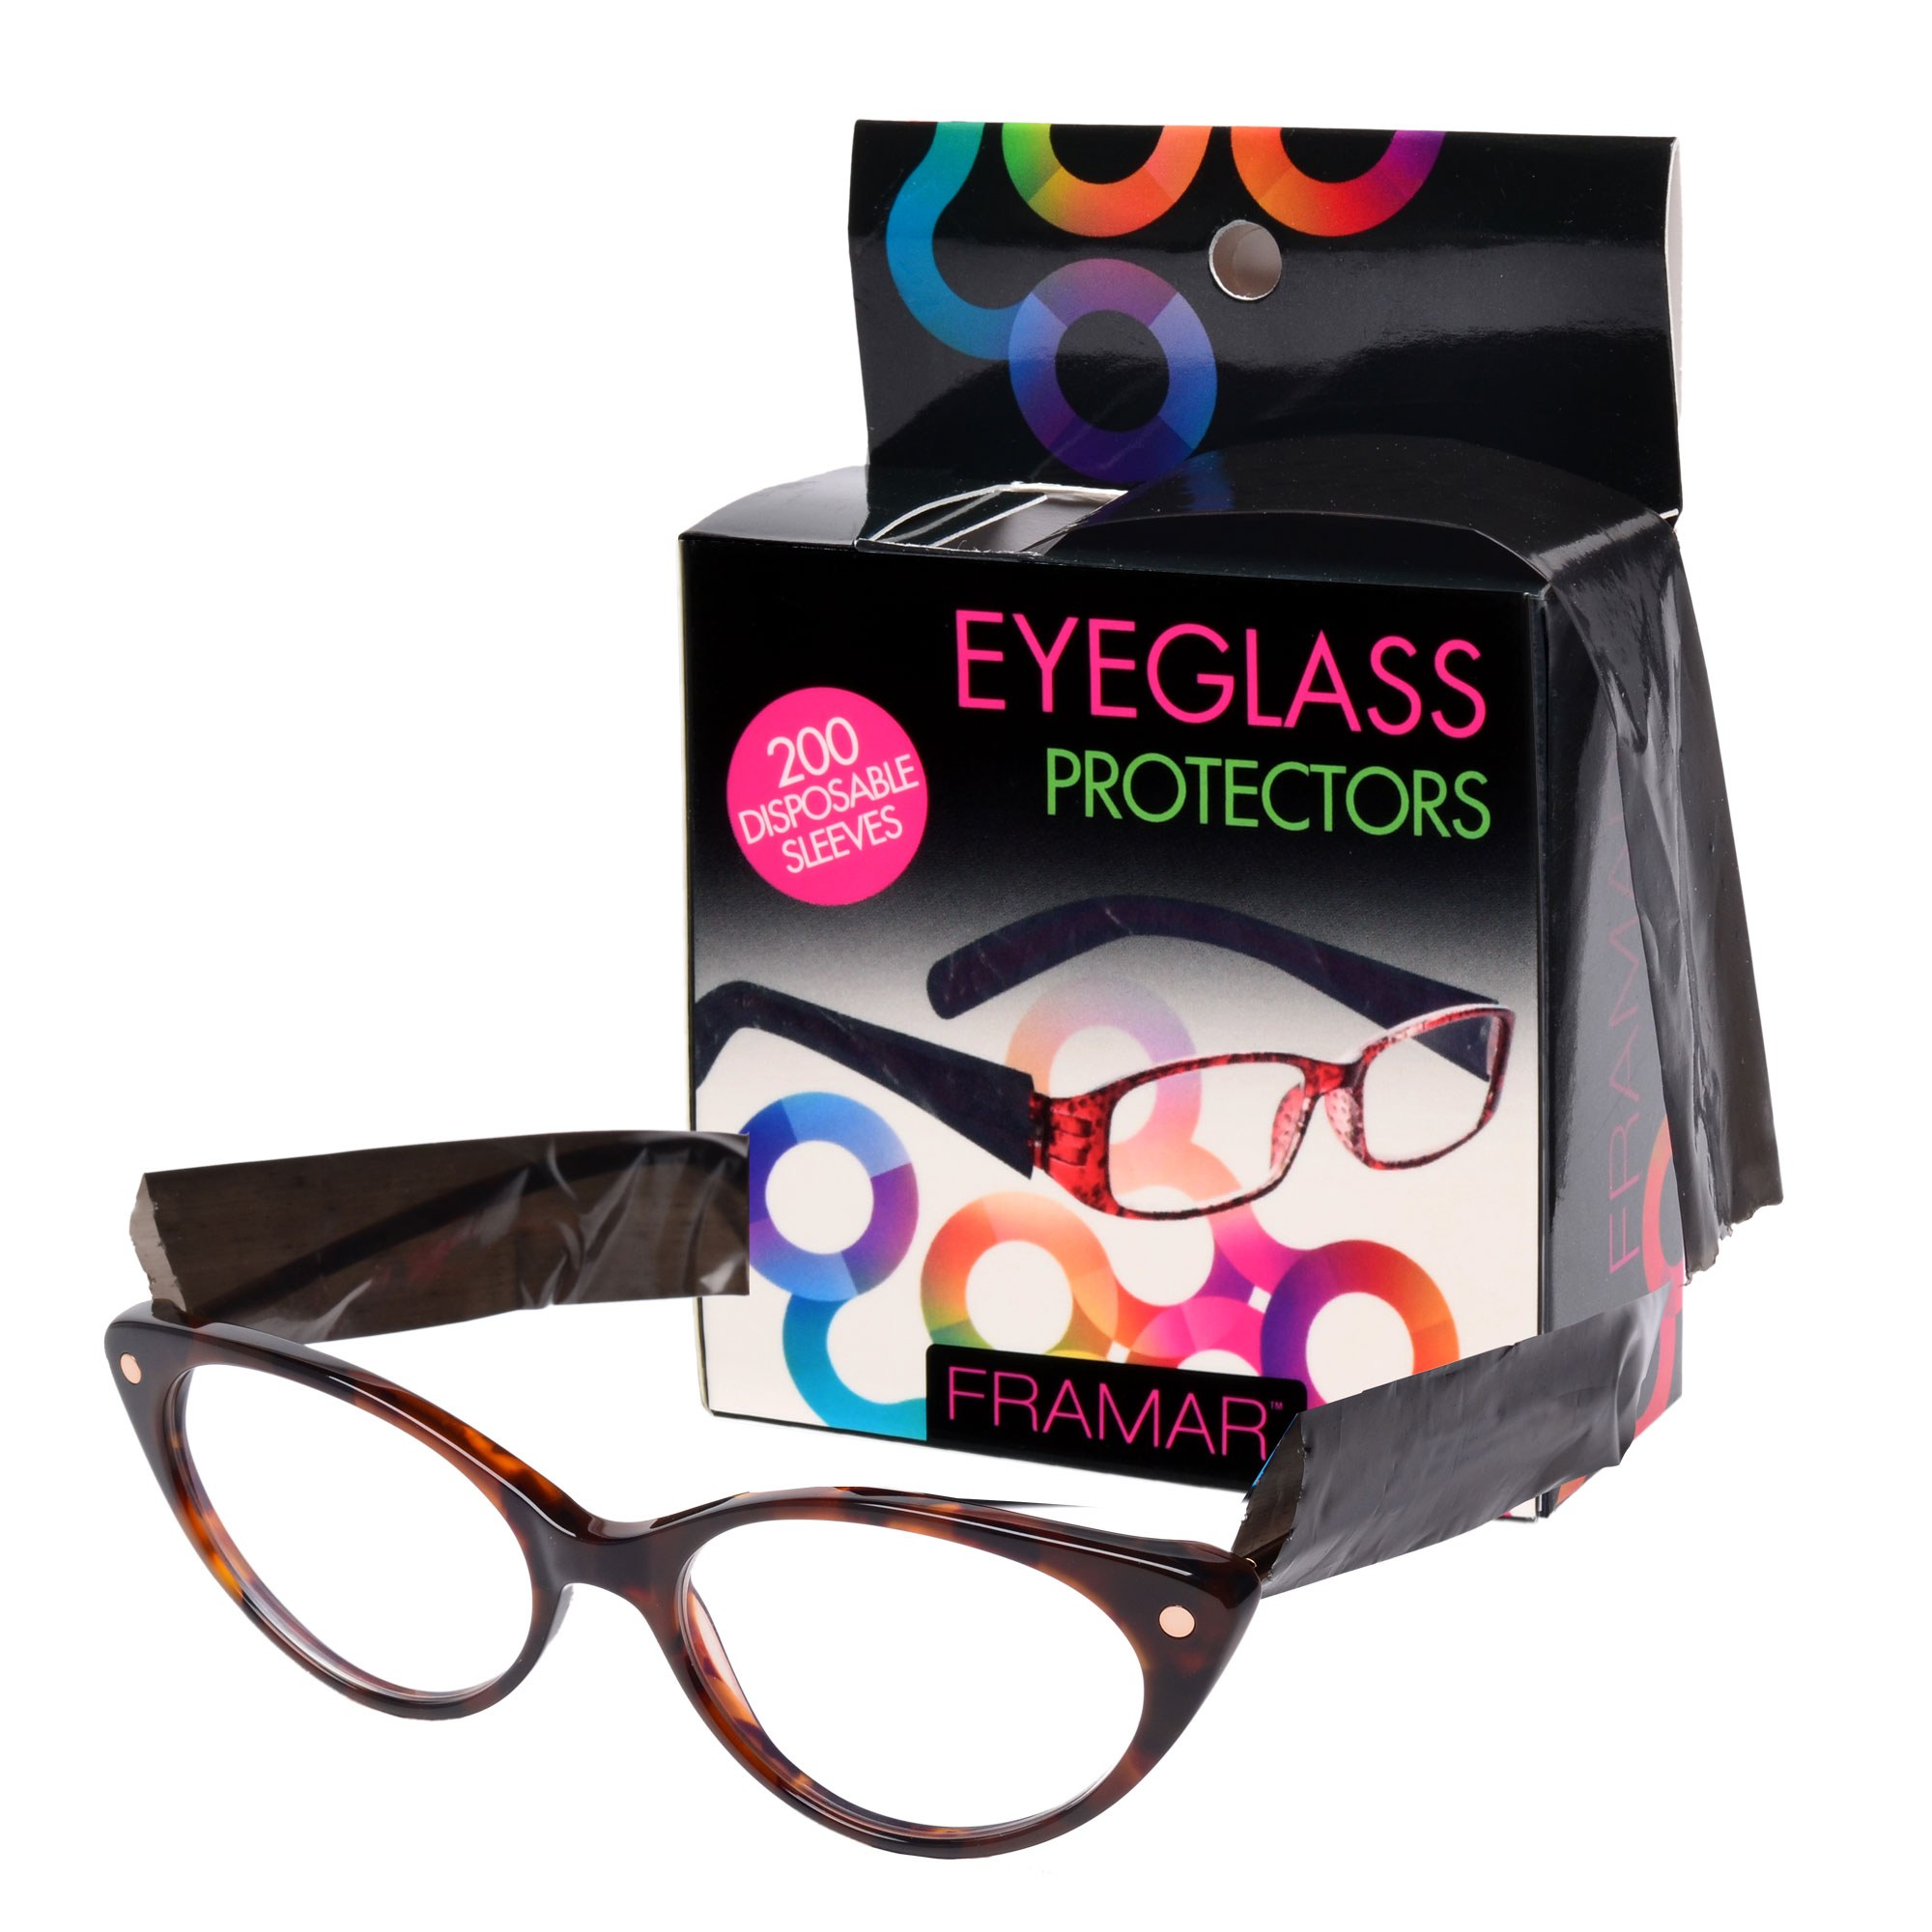 Framar TOYS: Eye Glass Protectors 200 pc